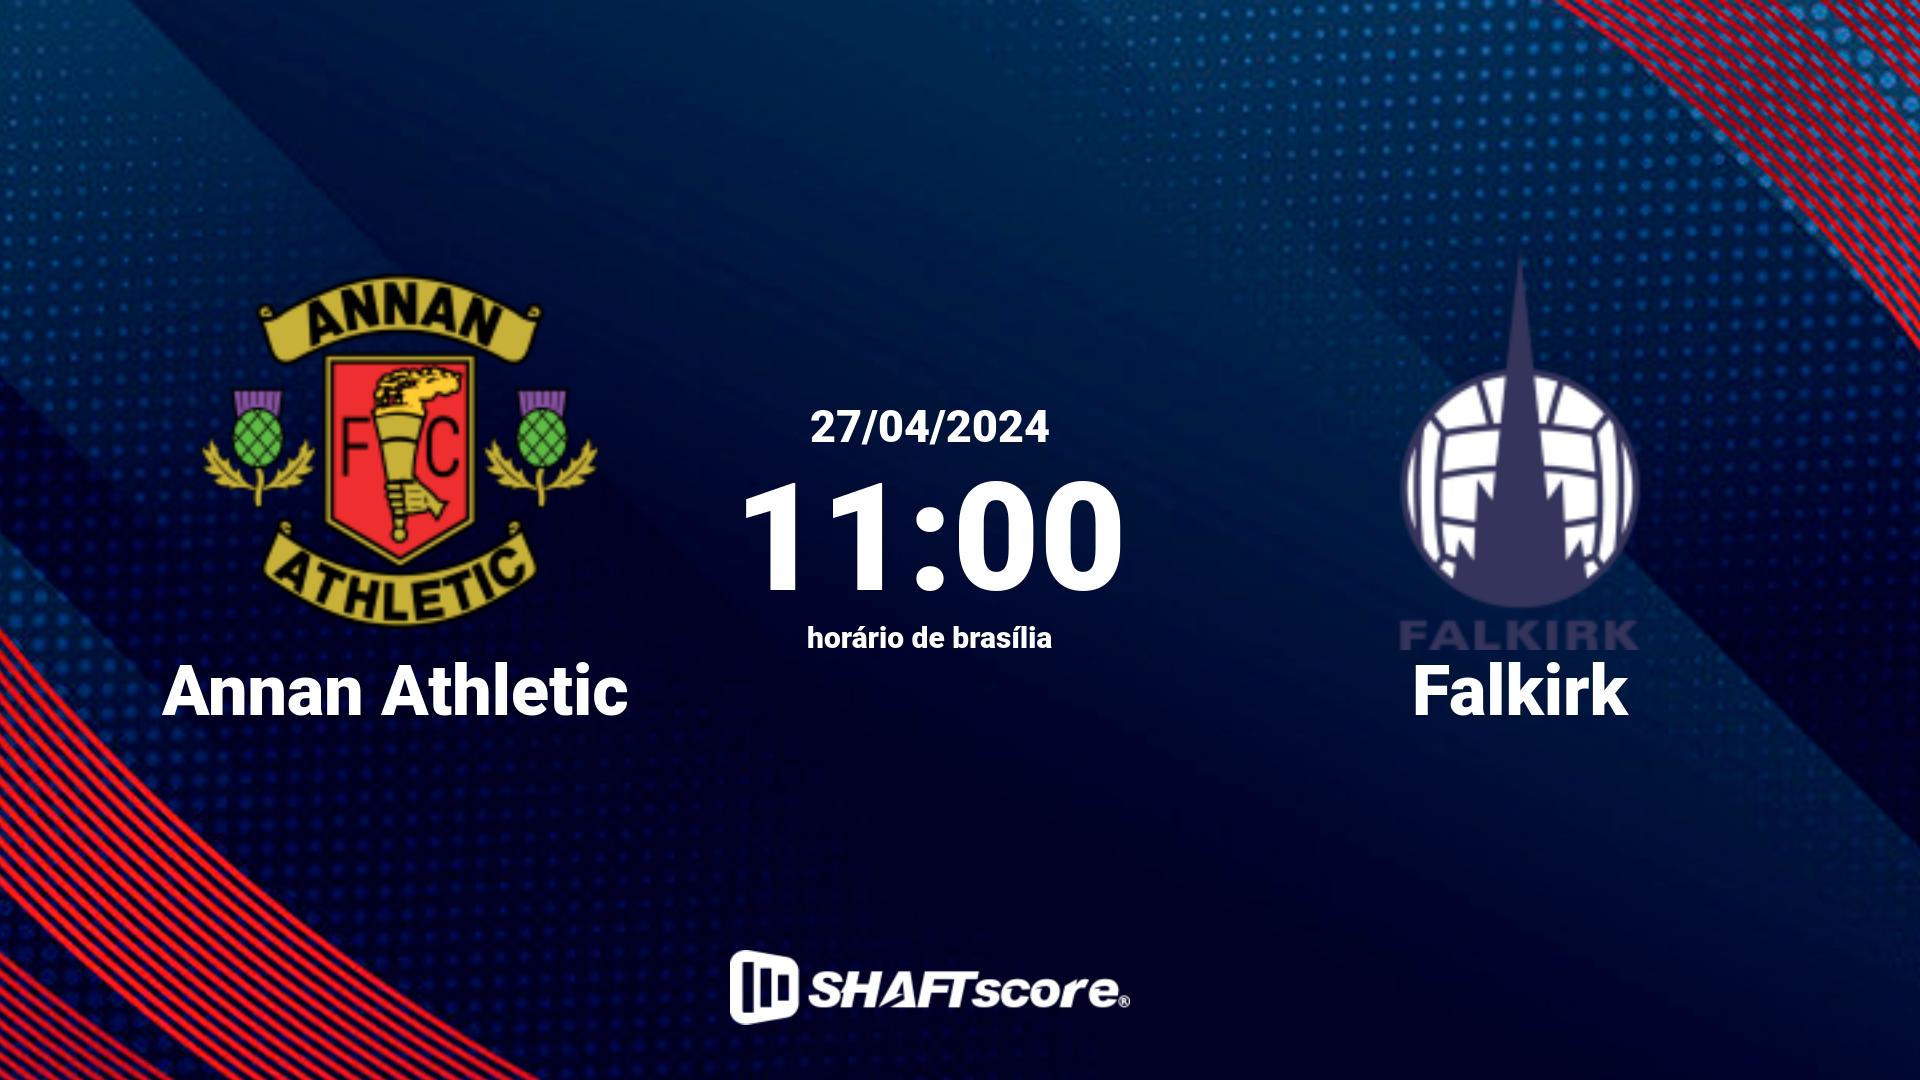 Estatísticas do jogo Annan Athletic vs Falkirk 27.04 11:00